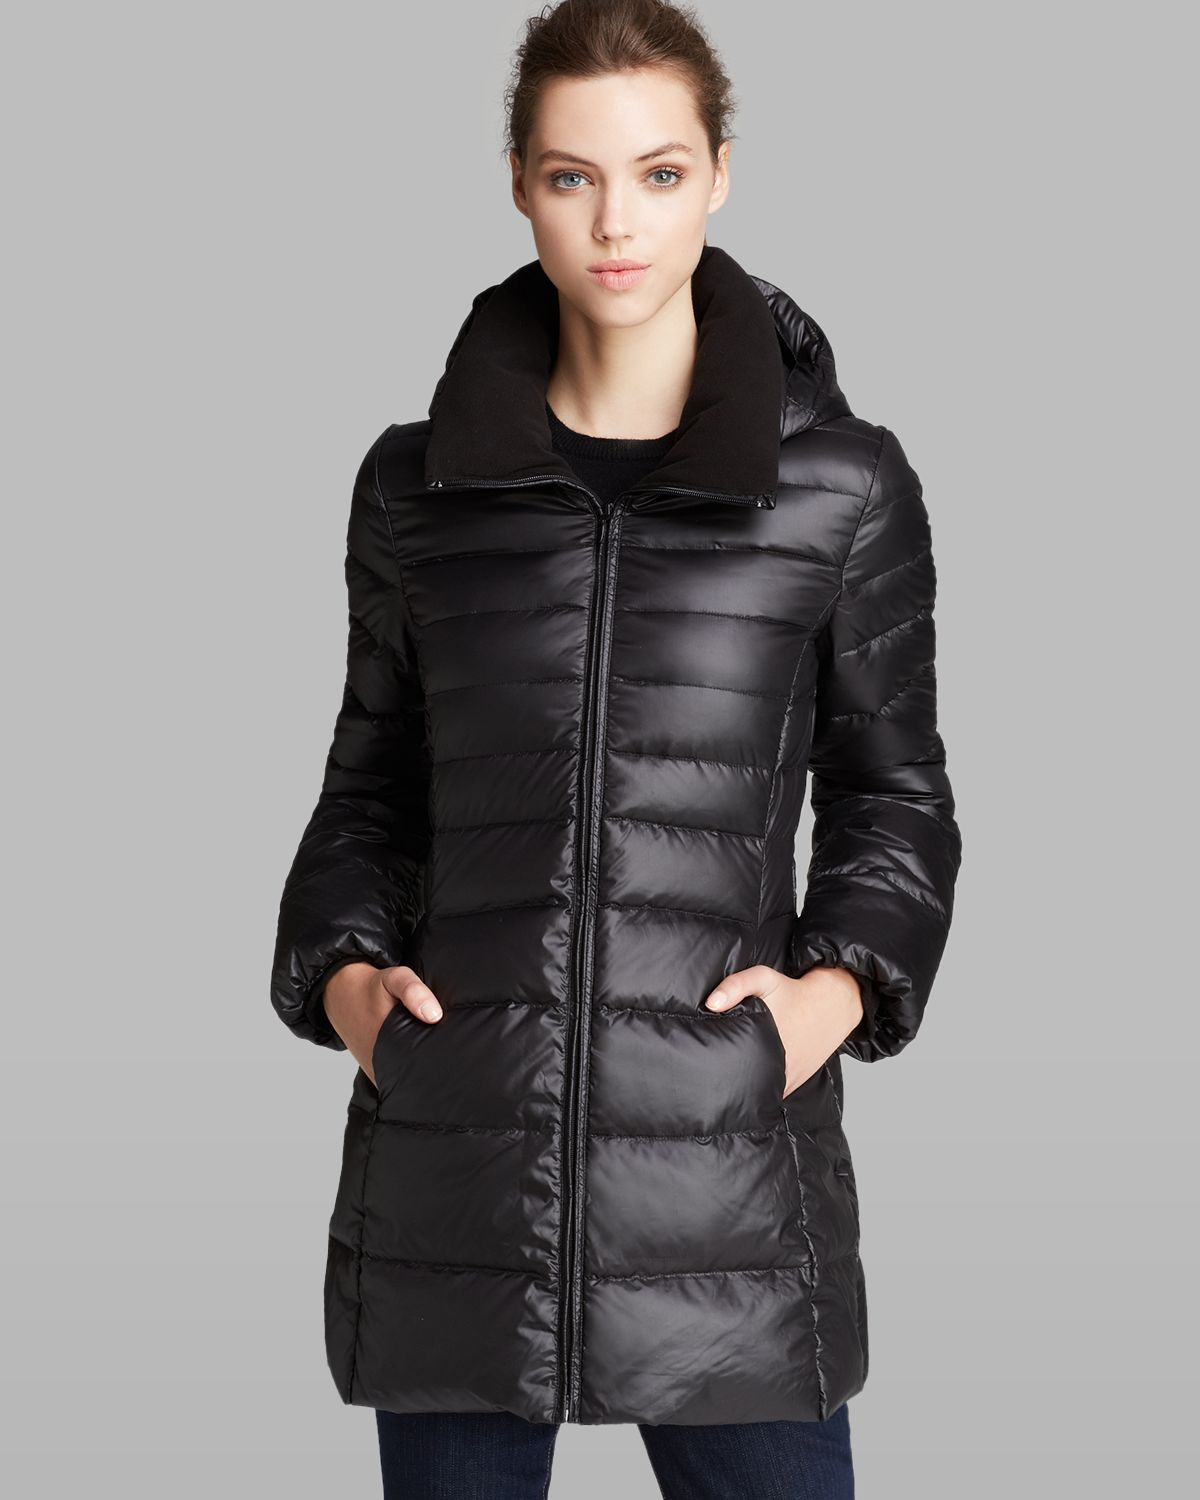 Marc New York Winter Coat the best online store offer